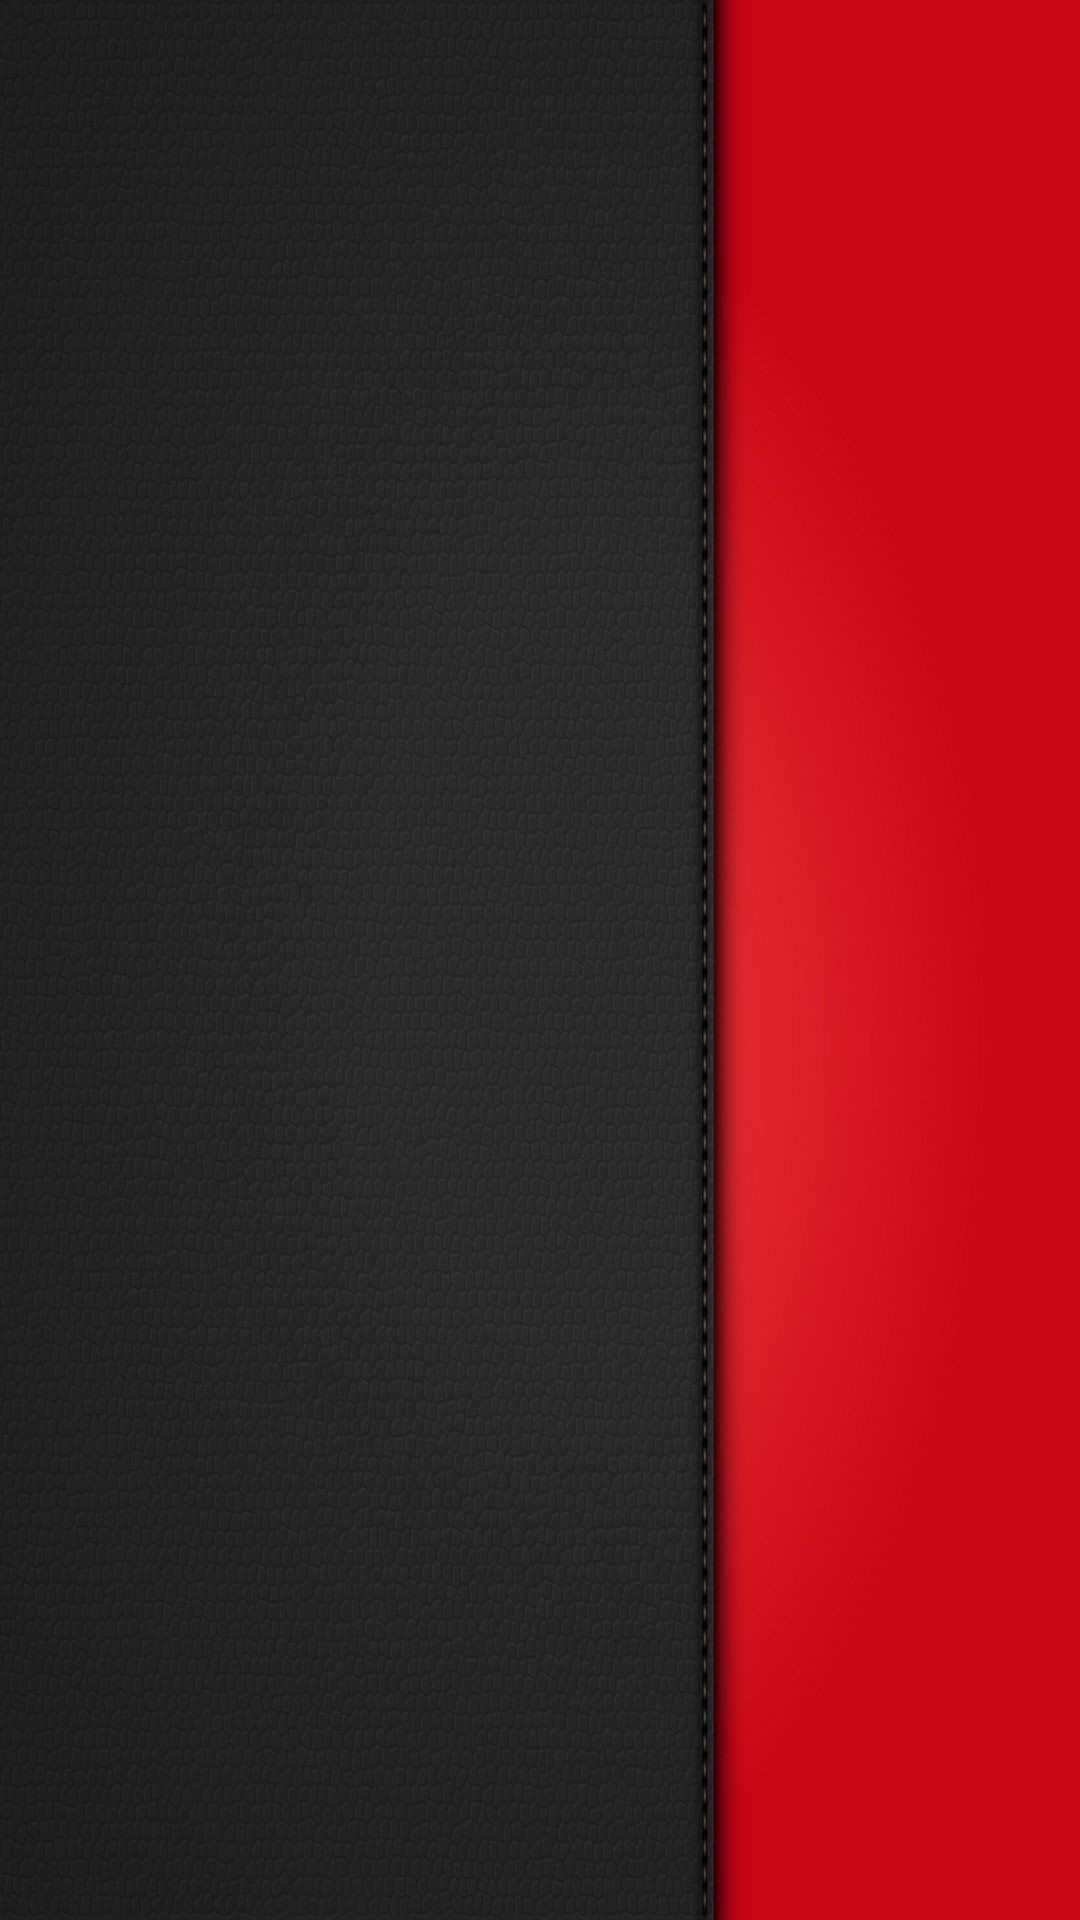 1080x1920 0 Orange Black Wallpaper Group Red iPhone 6 Plus Wallpaper